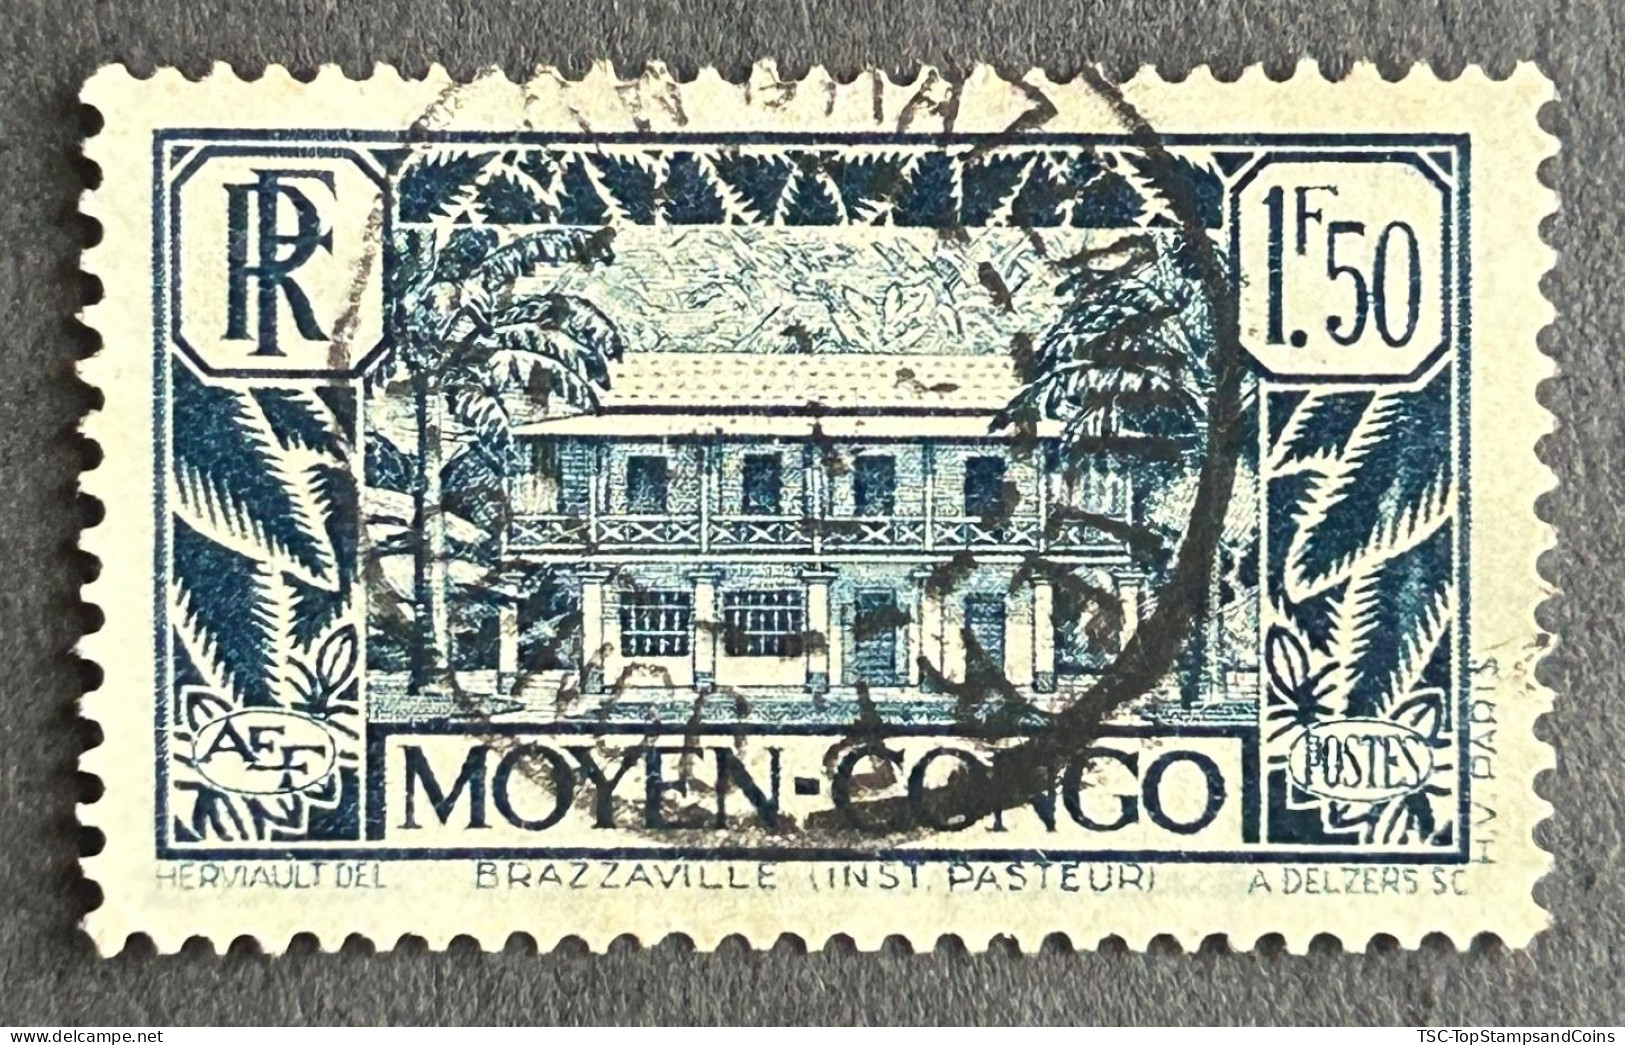 FRCG129U2 - Brazzaville - Pasteur Institute - 1.50 F Used Stamp - Middle Congo - 1933 - Usati